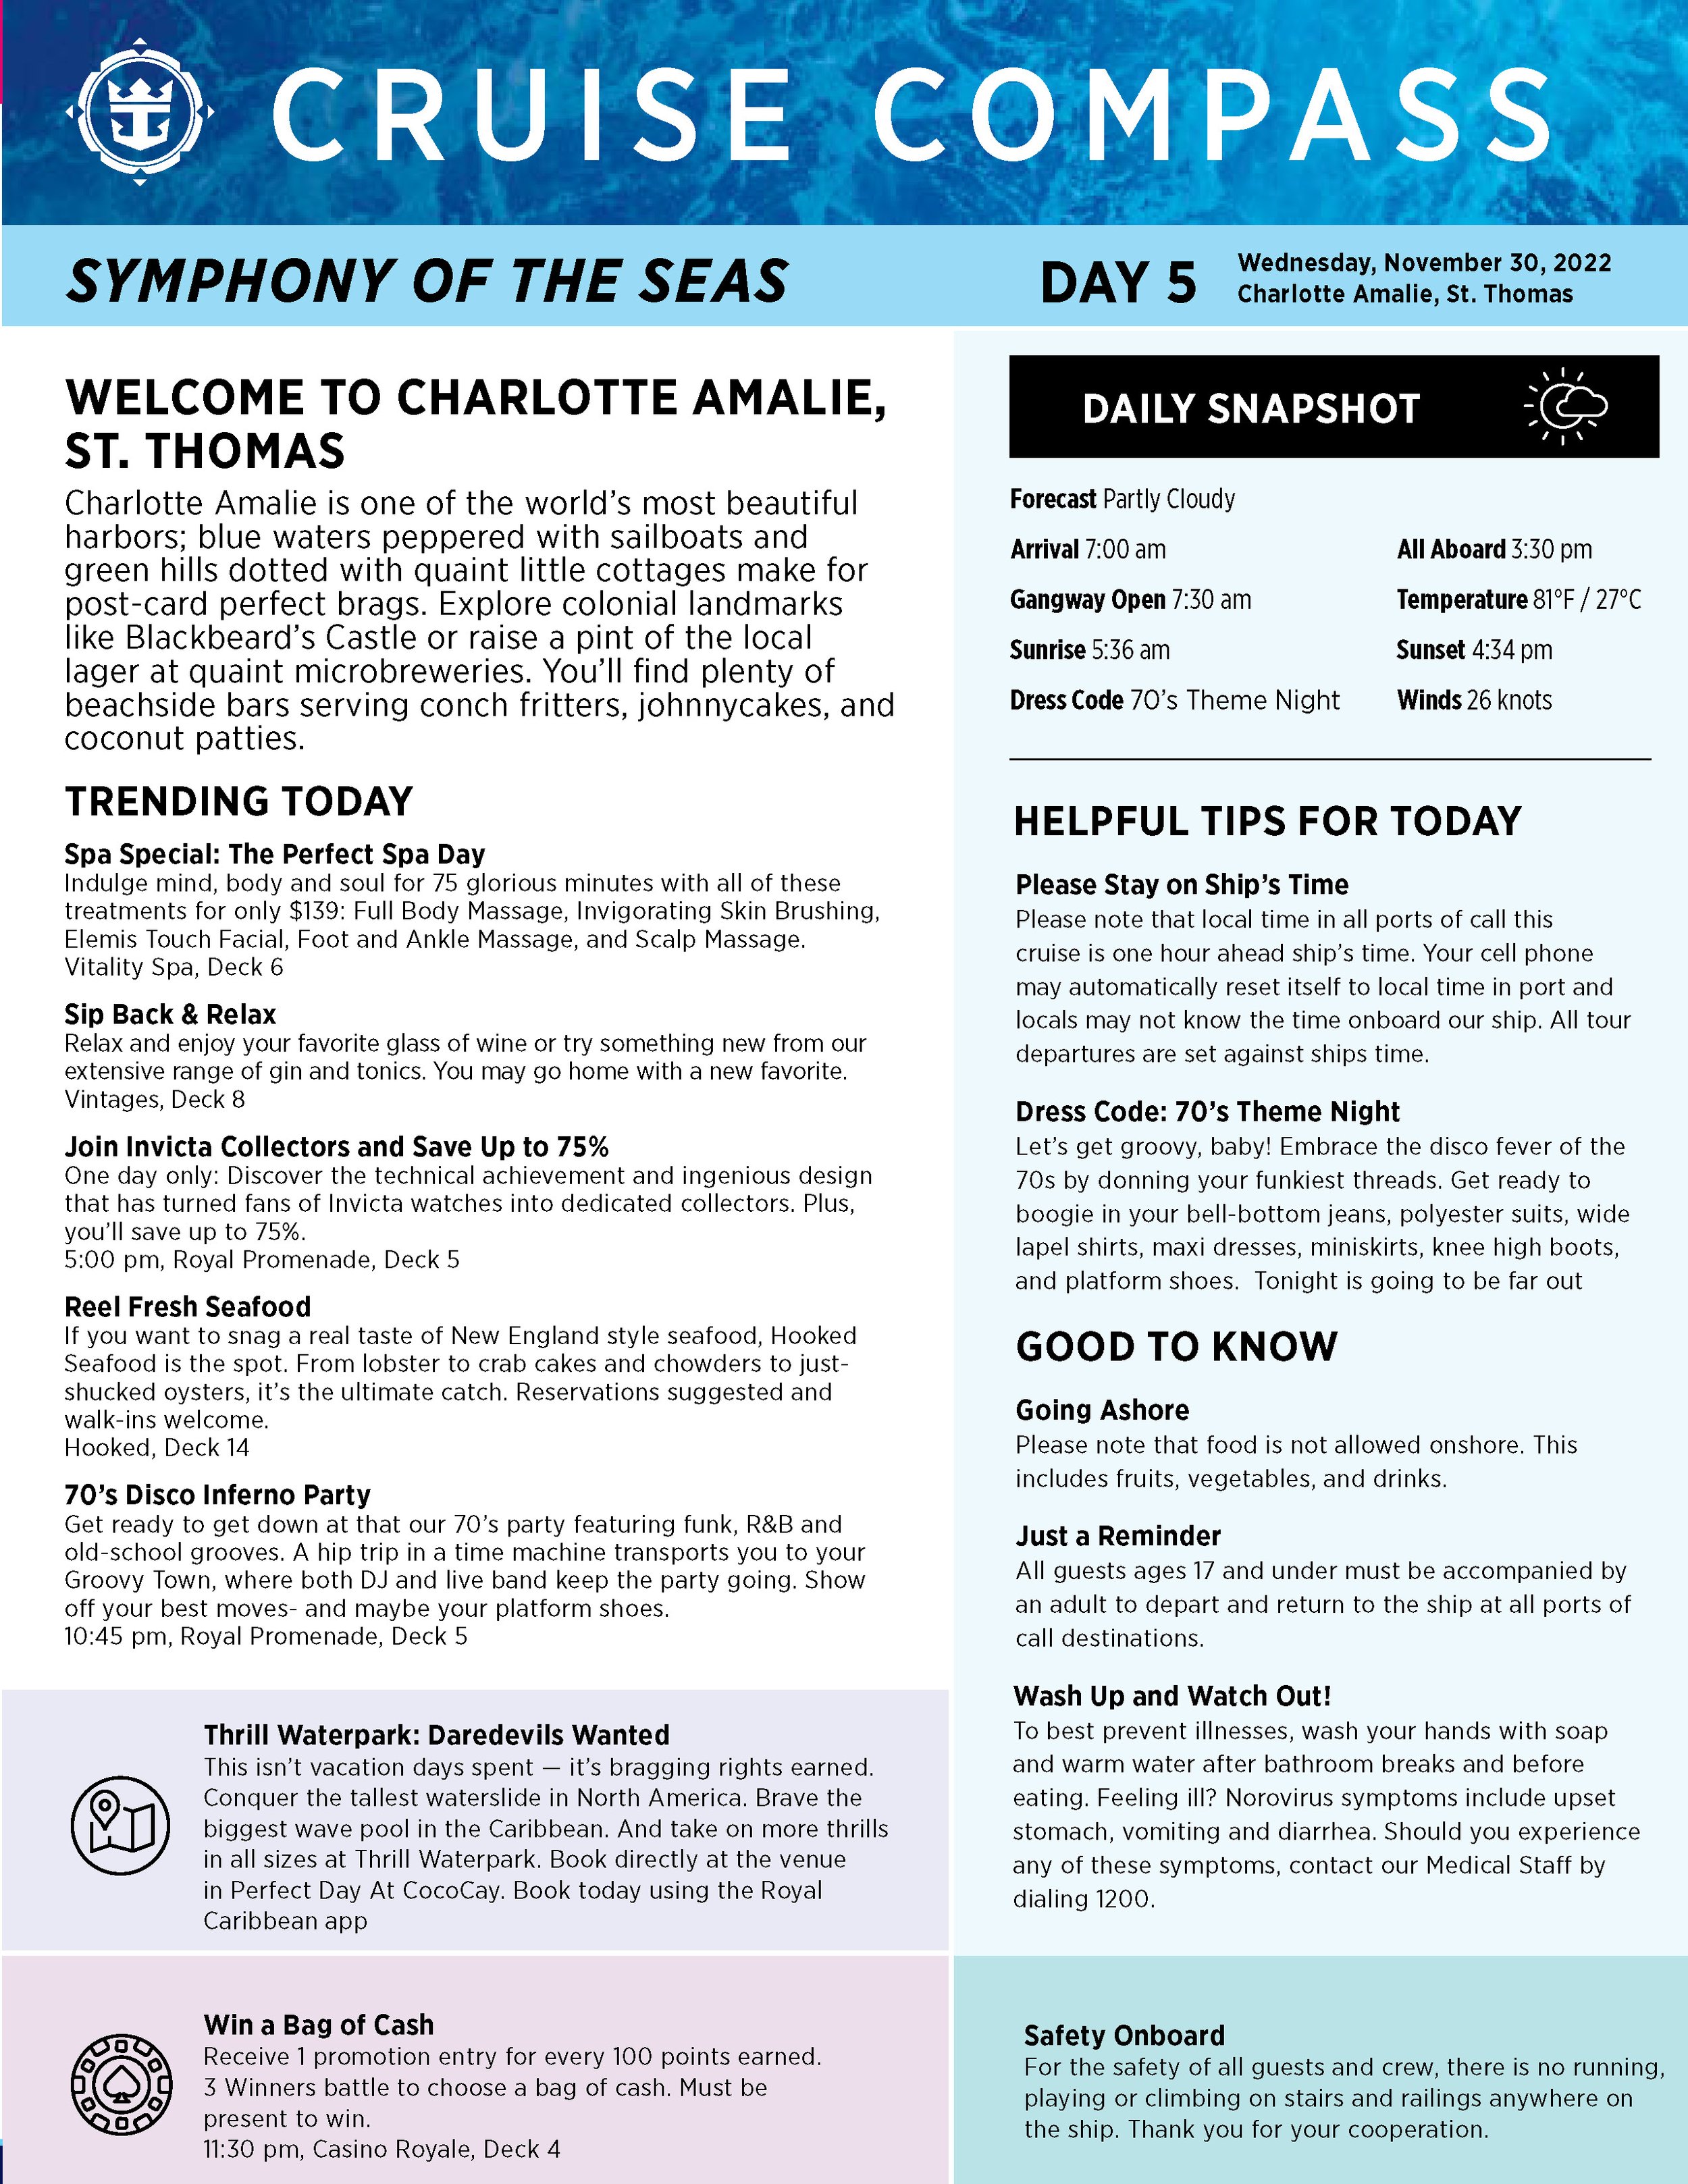 Nov 30, 2022 -Symphony of the Seas- Day05 -St Thomas Island USVI, Charlotte Amalie, US Virgin Islands - Page 01.jpg